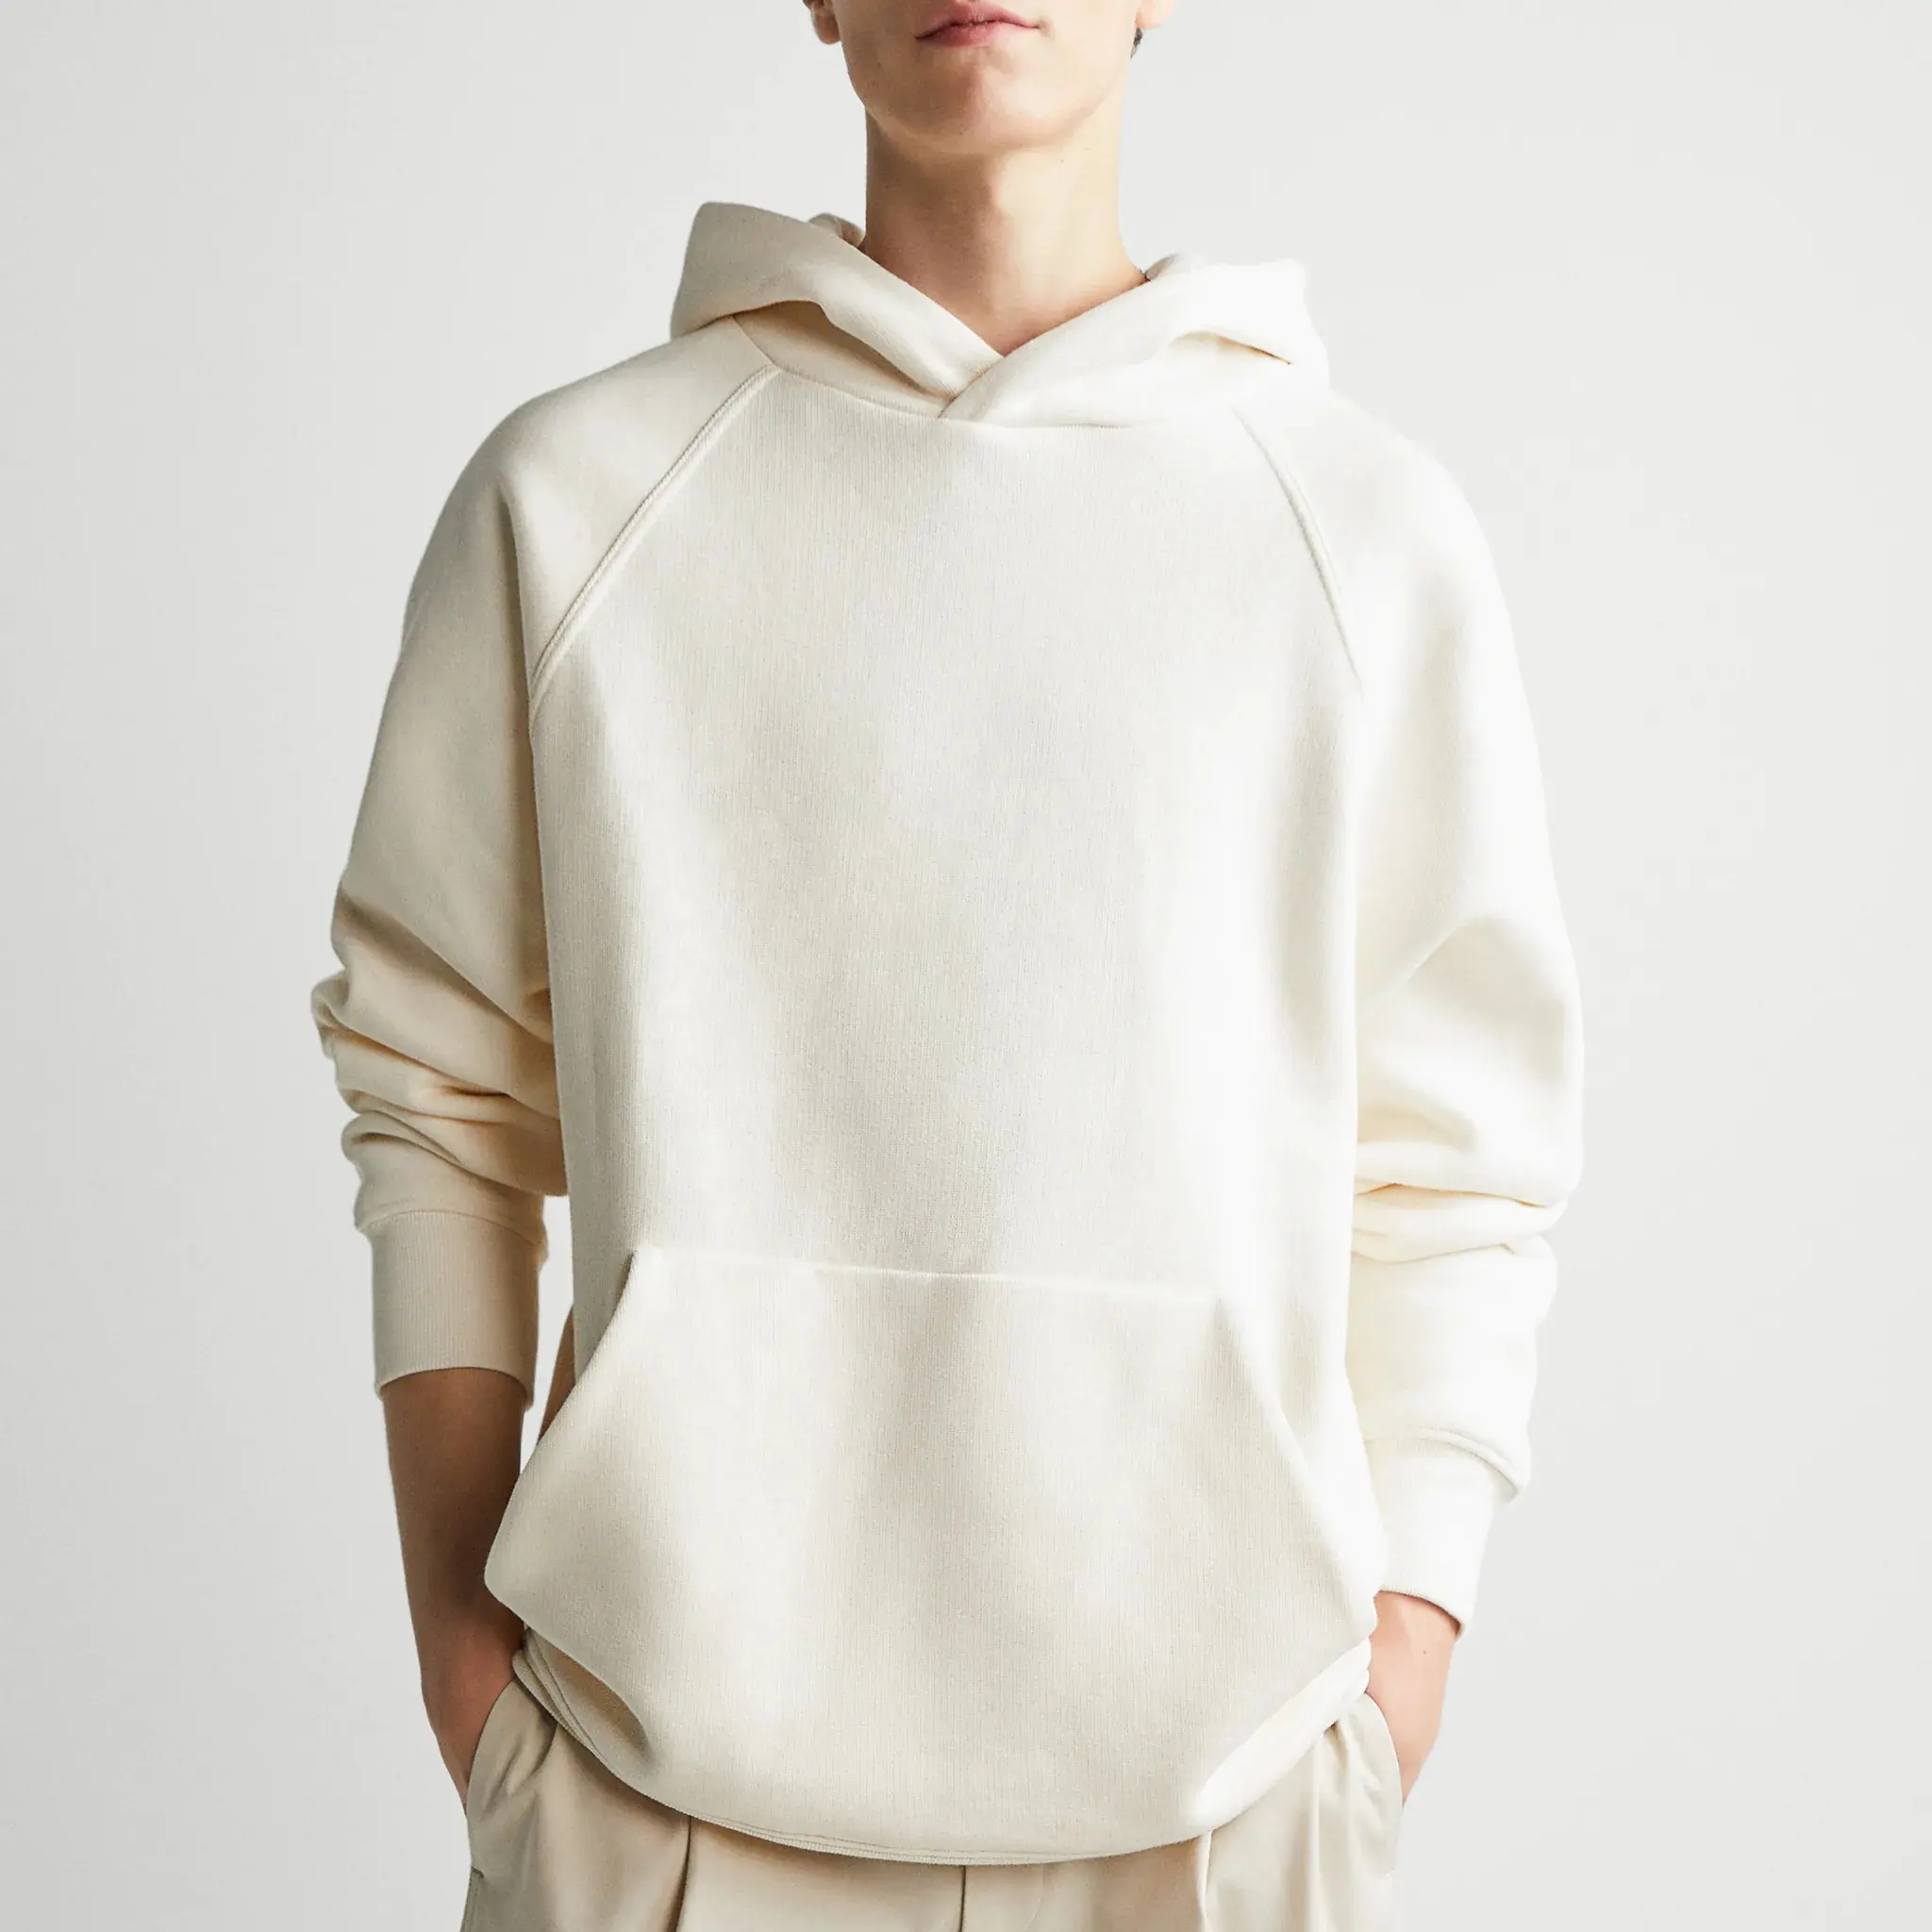 OEM custom boxy raglan pullover 100% cotton plain basic raglan sleeve hoodies for men